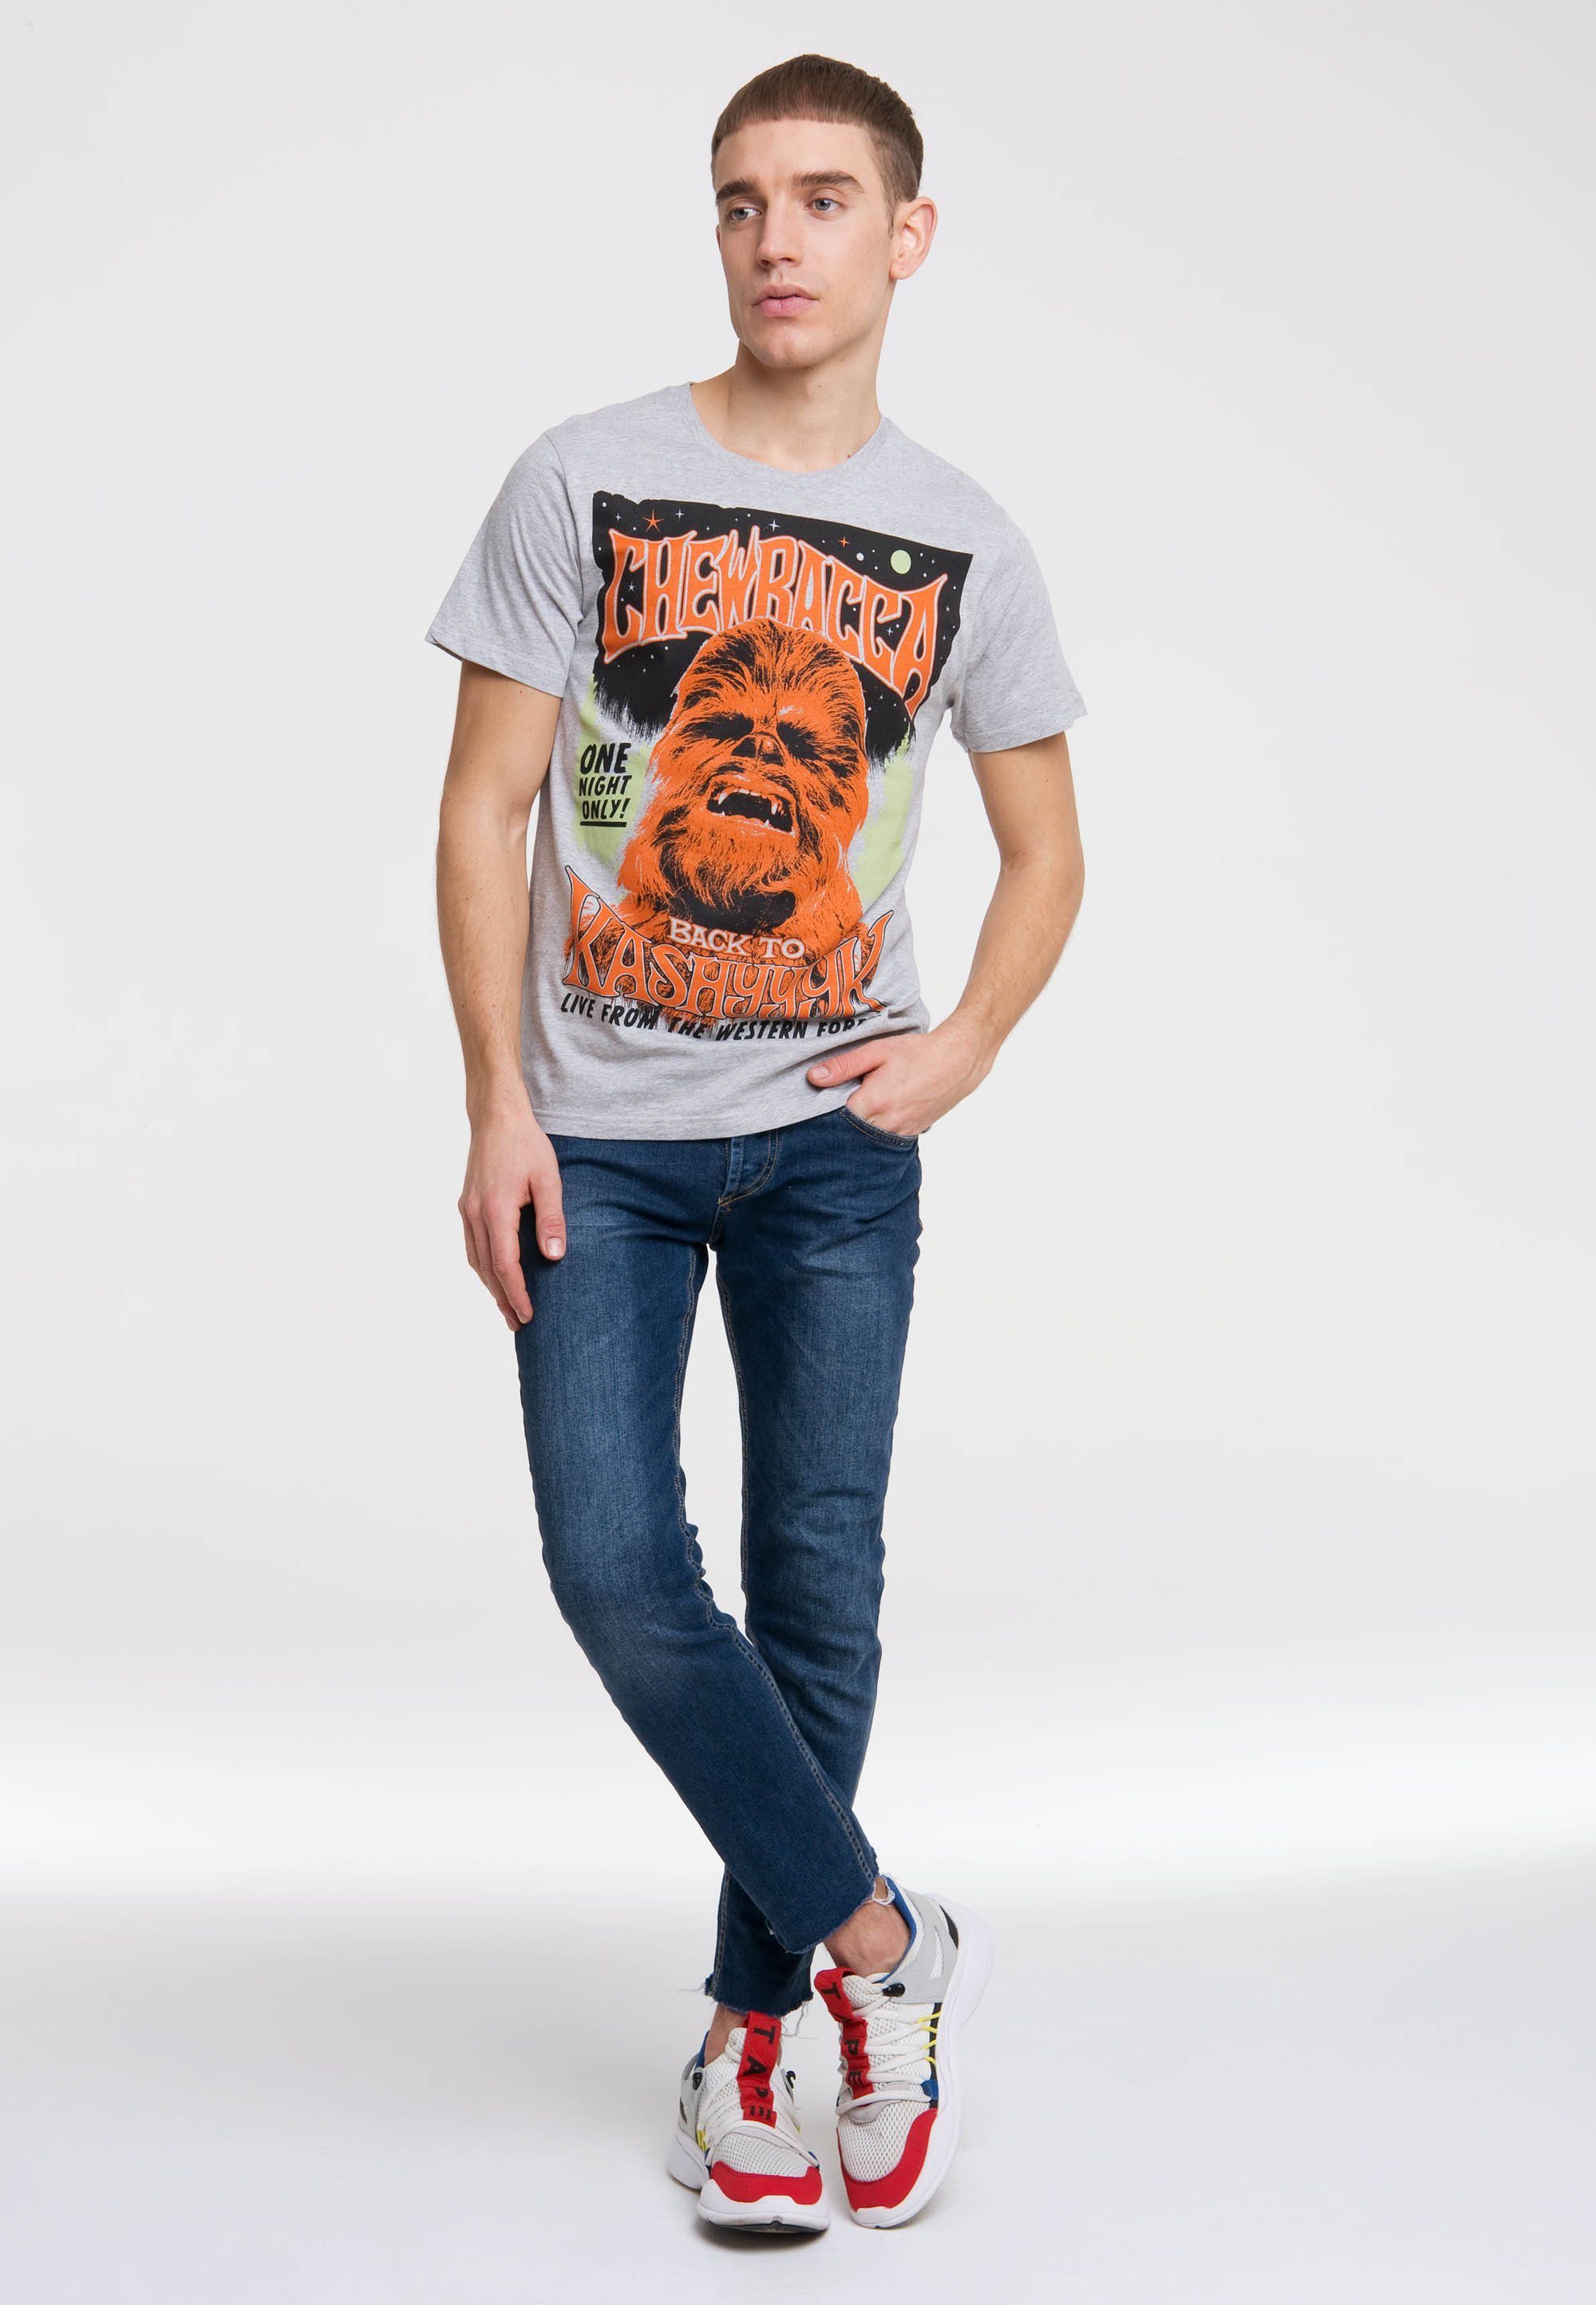 LOGOSHIRT T-Shirt Star Wars - Chewbacca - Back To Kashyyyk mit Chewbacca -Frontdruck